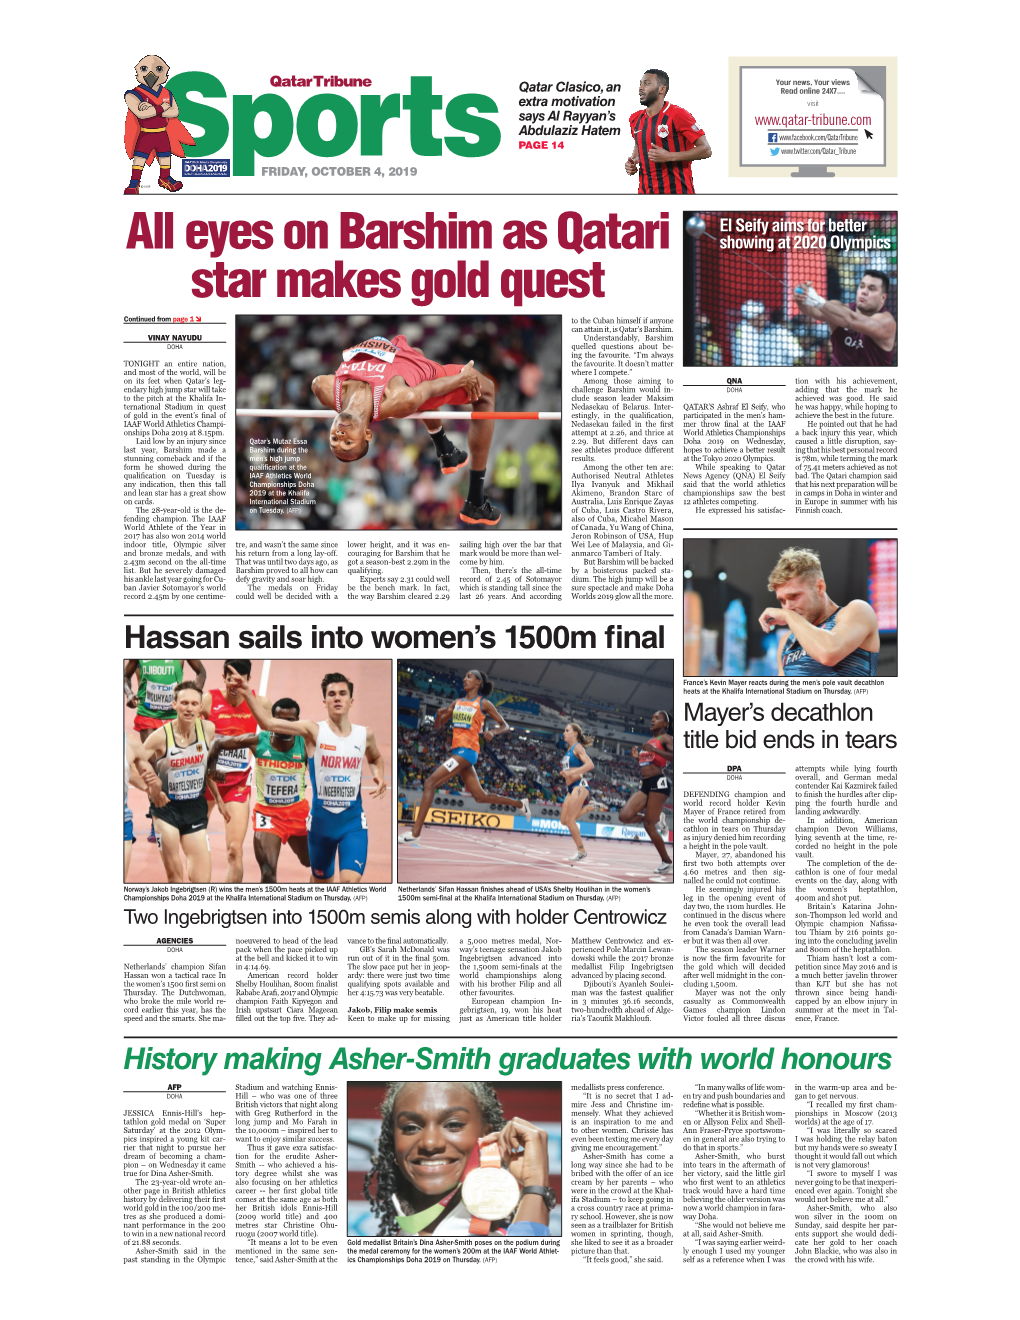 Eyes on Barshim As Qatari Star Makes Gold Quest